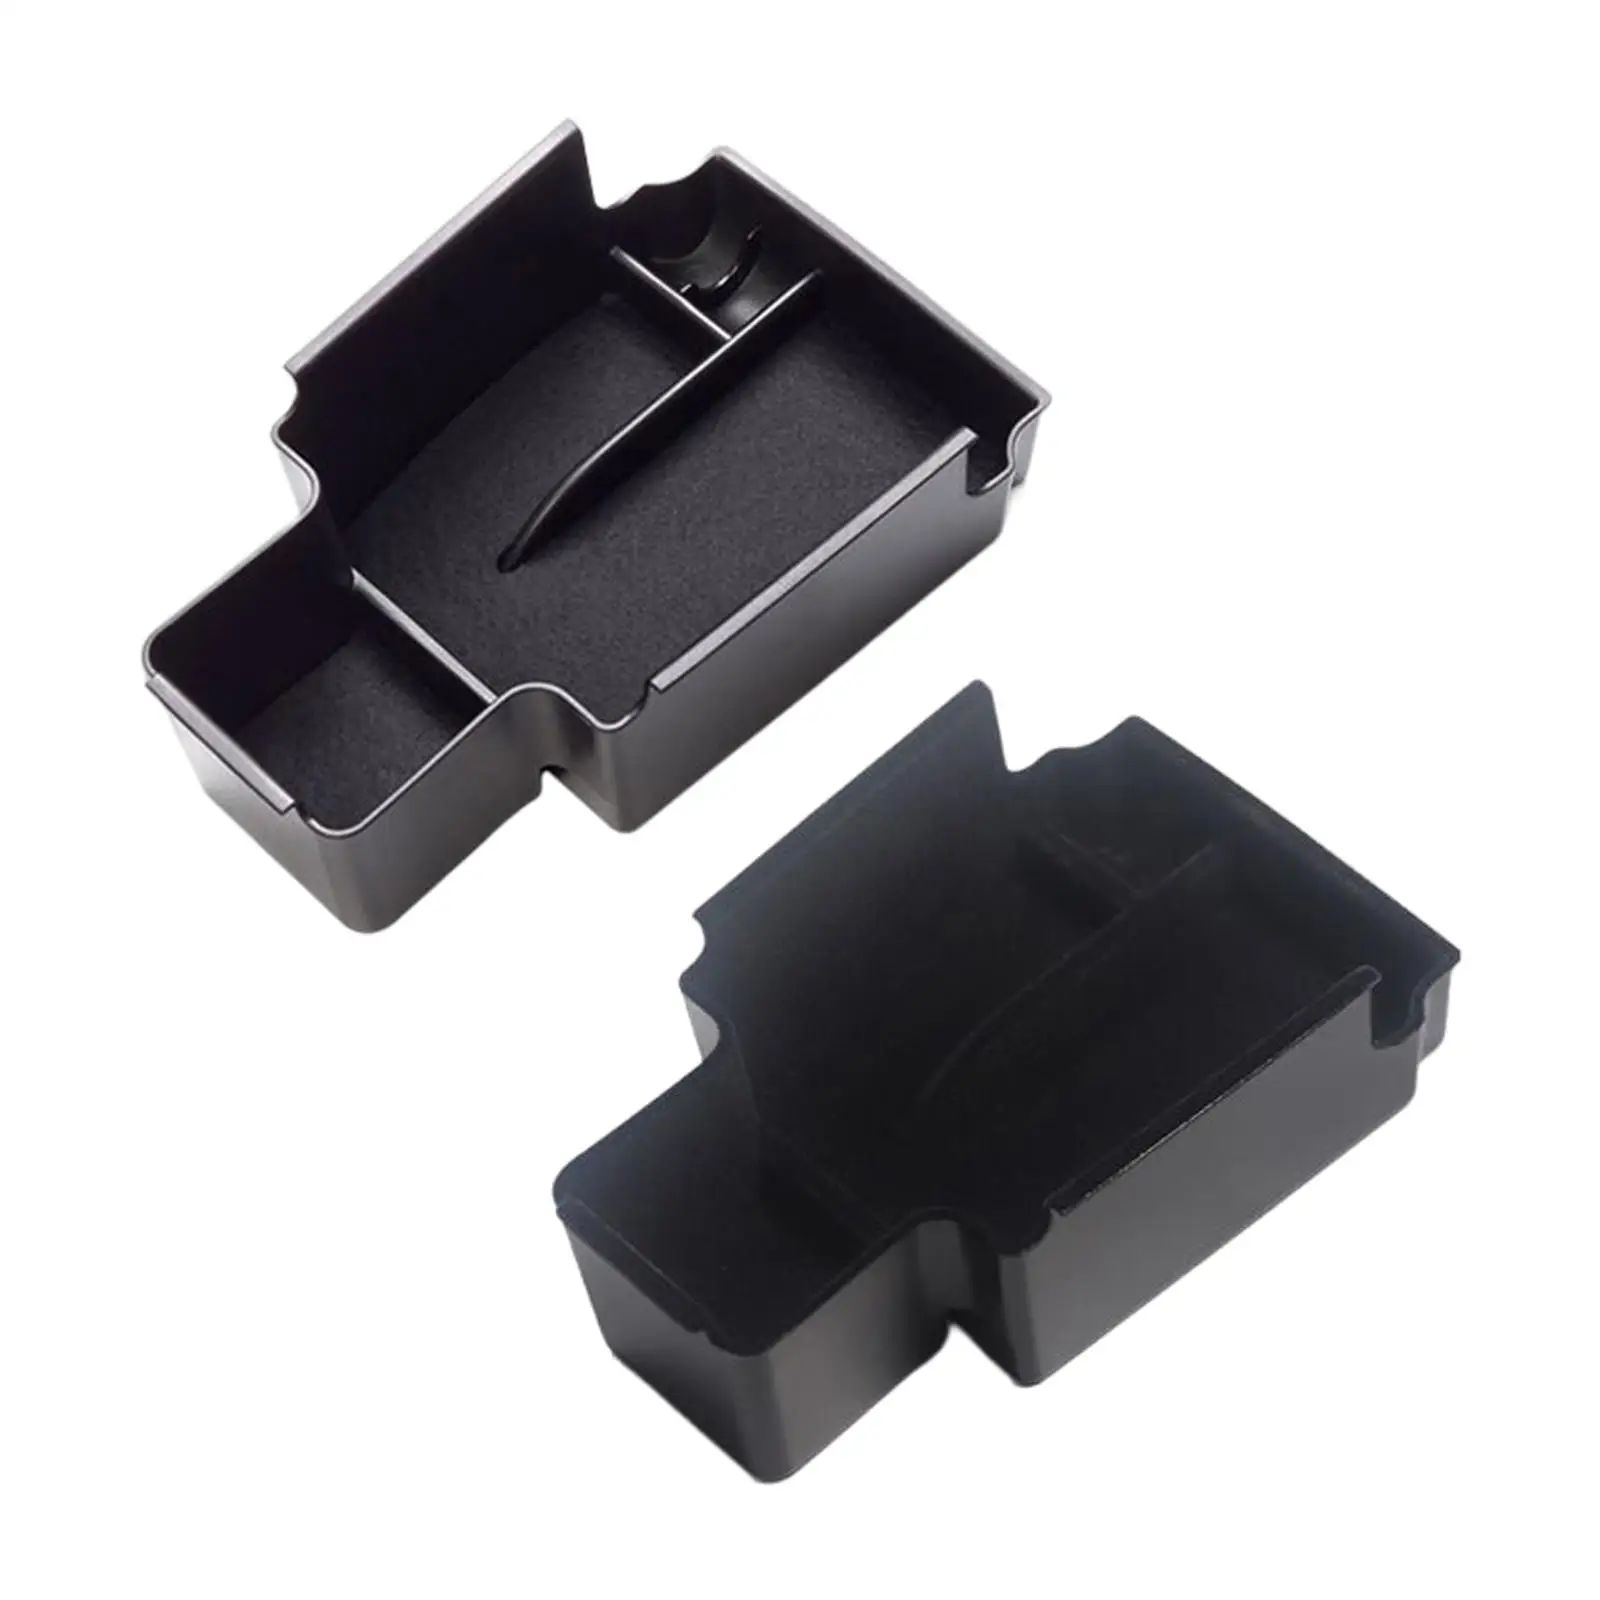 Automotive Center Console Armrest Storage Box Black Organizer Insert Tray for Ora Gwm Good Cat Durable Replace Parts